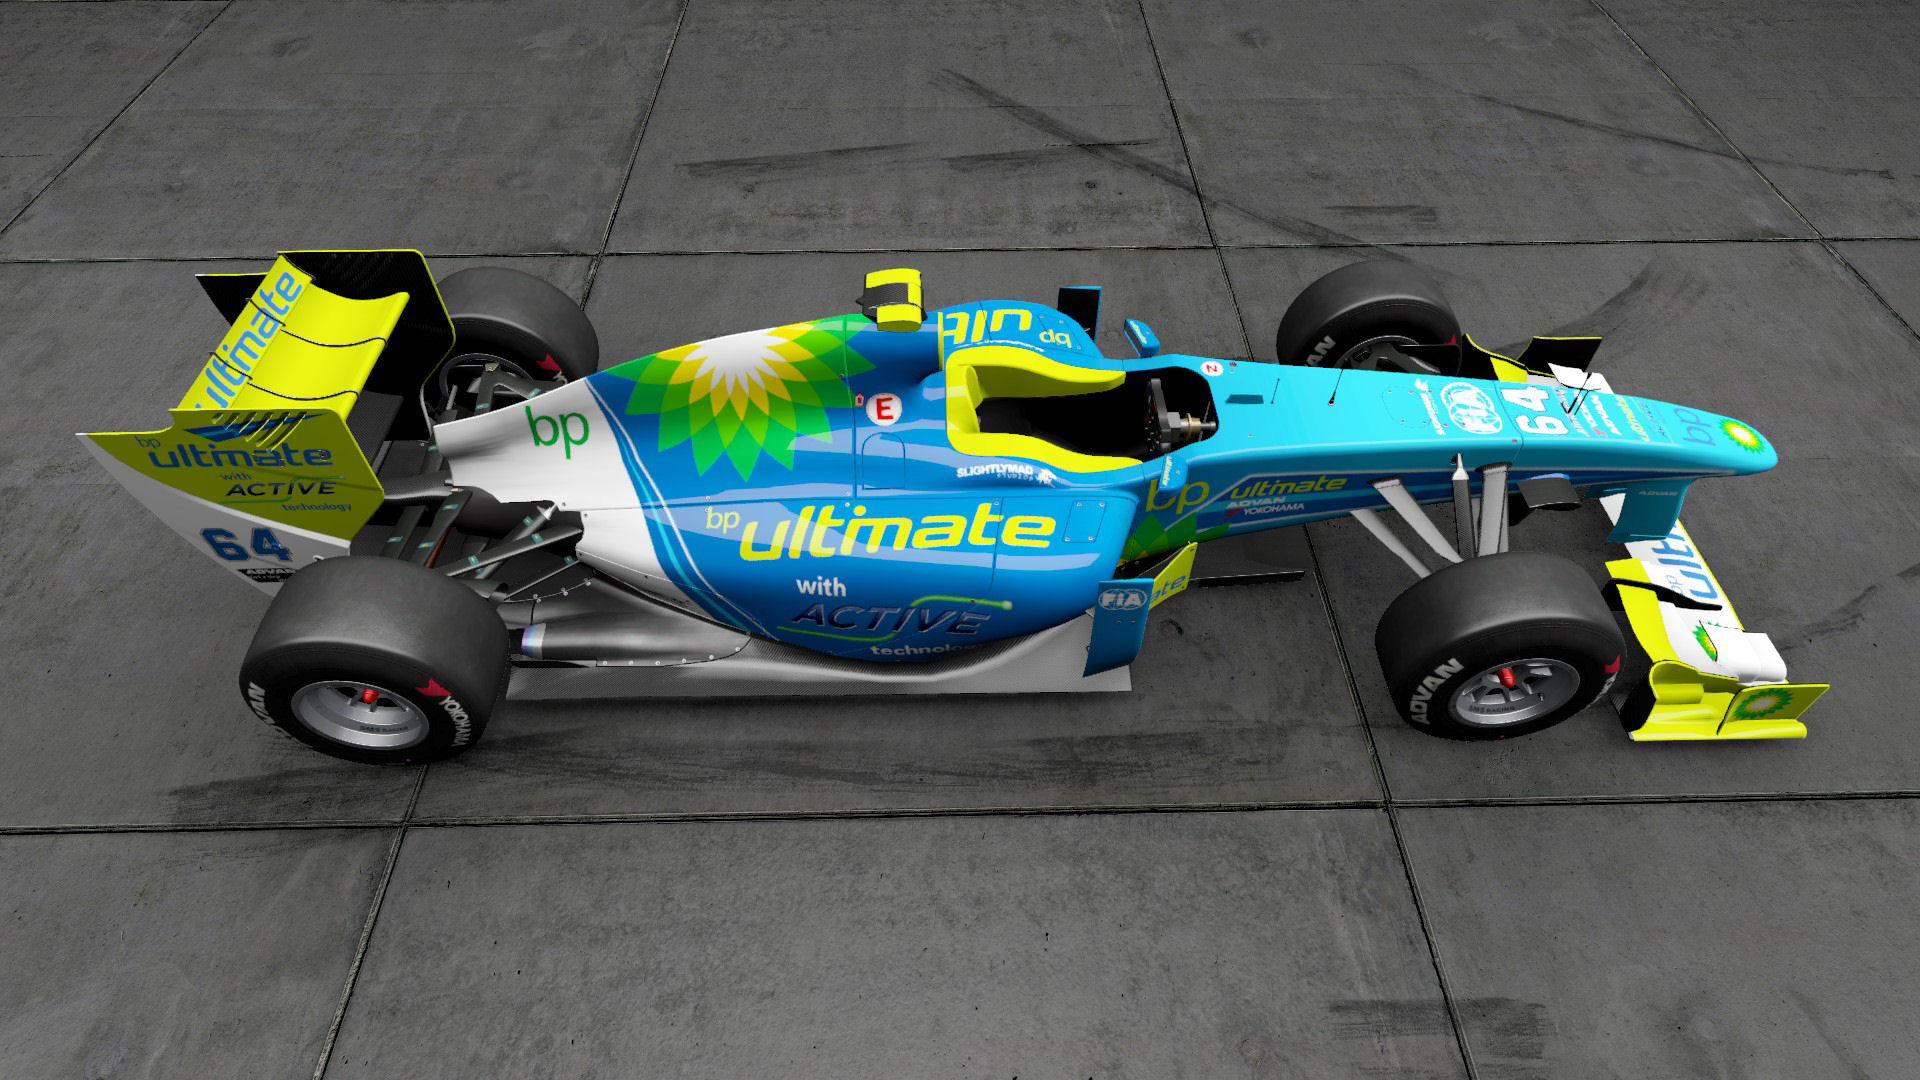 BP Ultimate Formula A 02.jpg